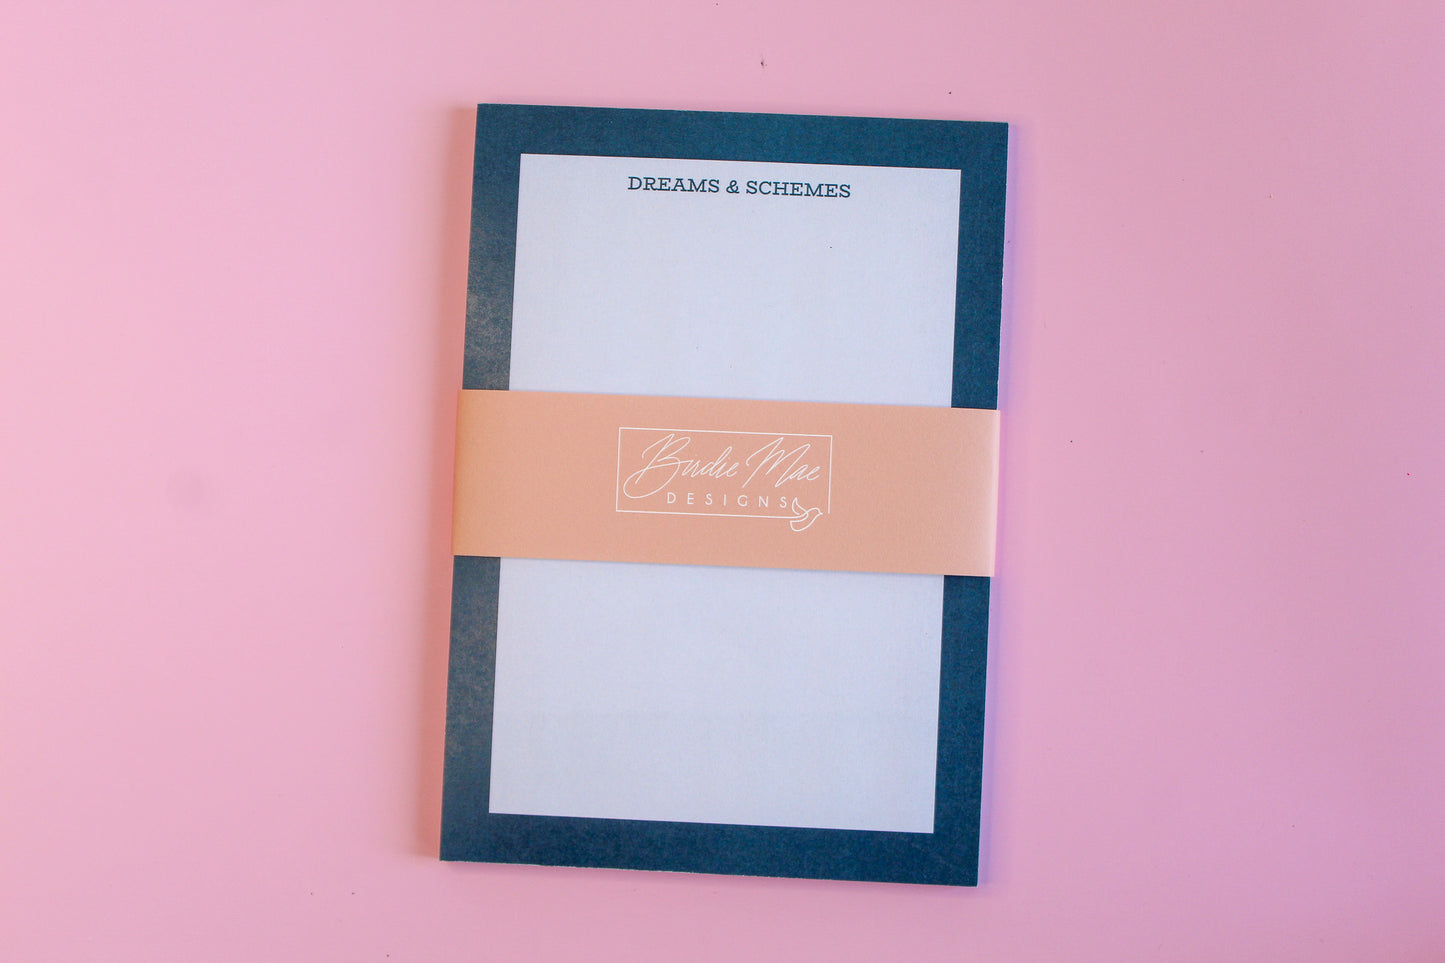 Dreams & Schemes' notepads fun, creative, empowering notepads